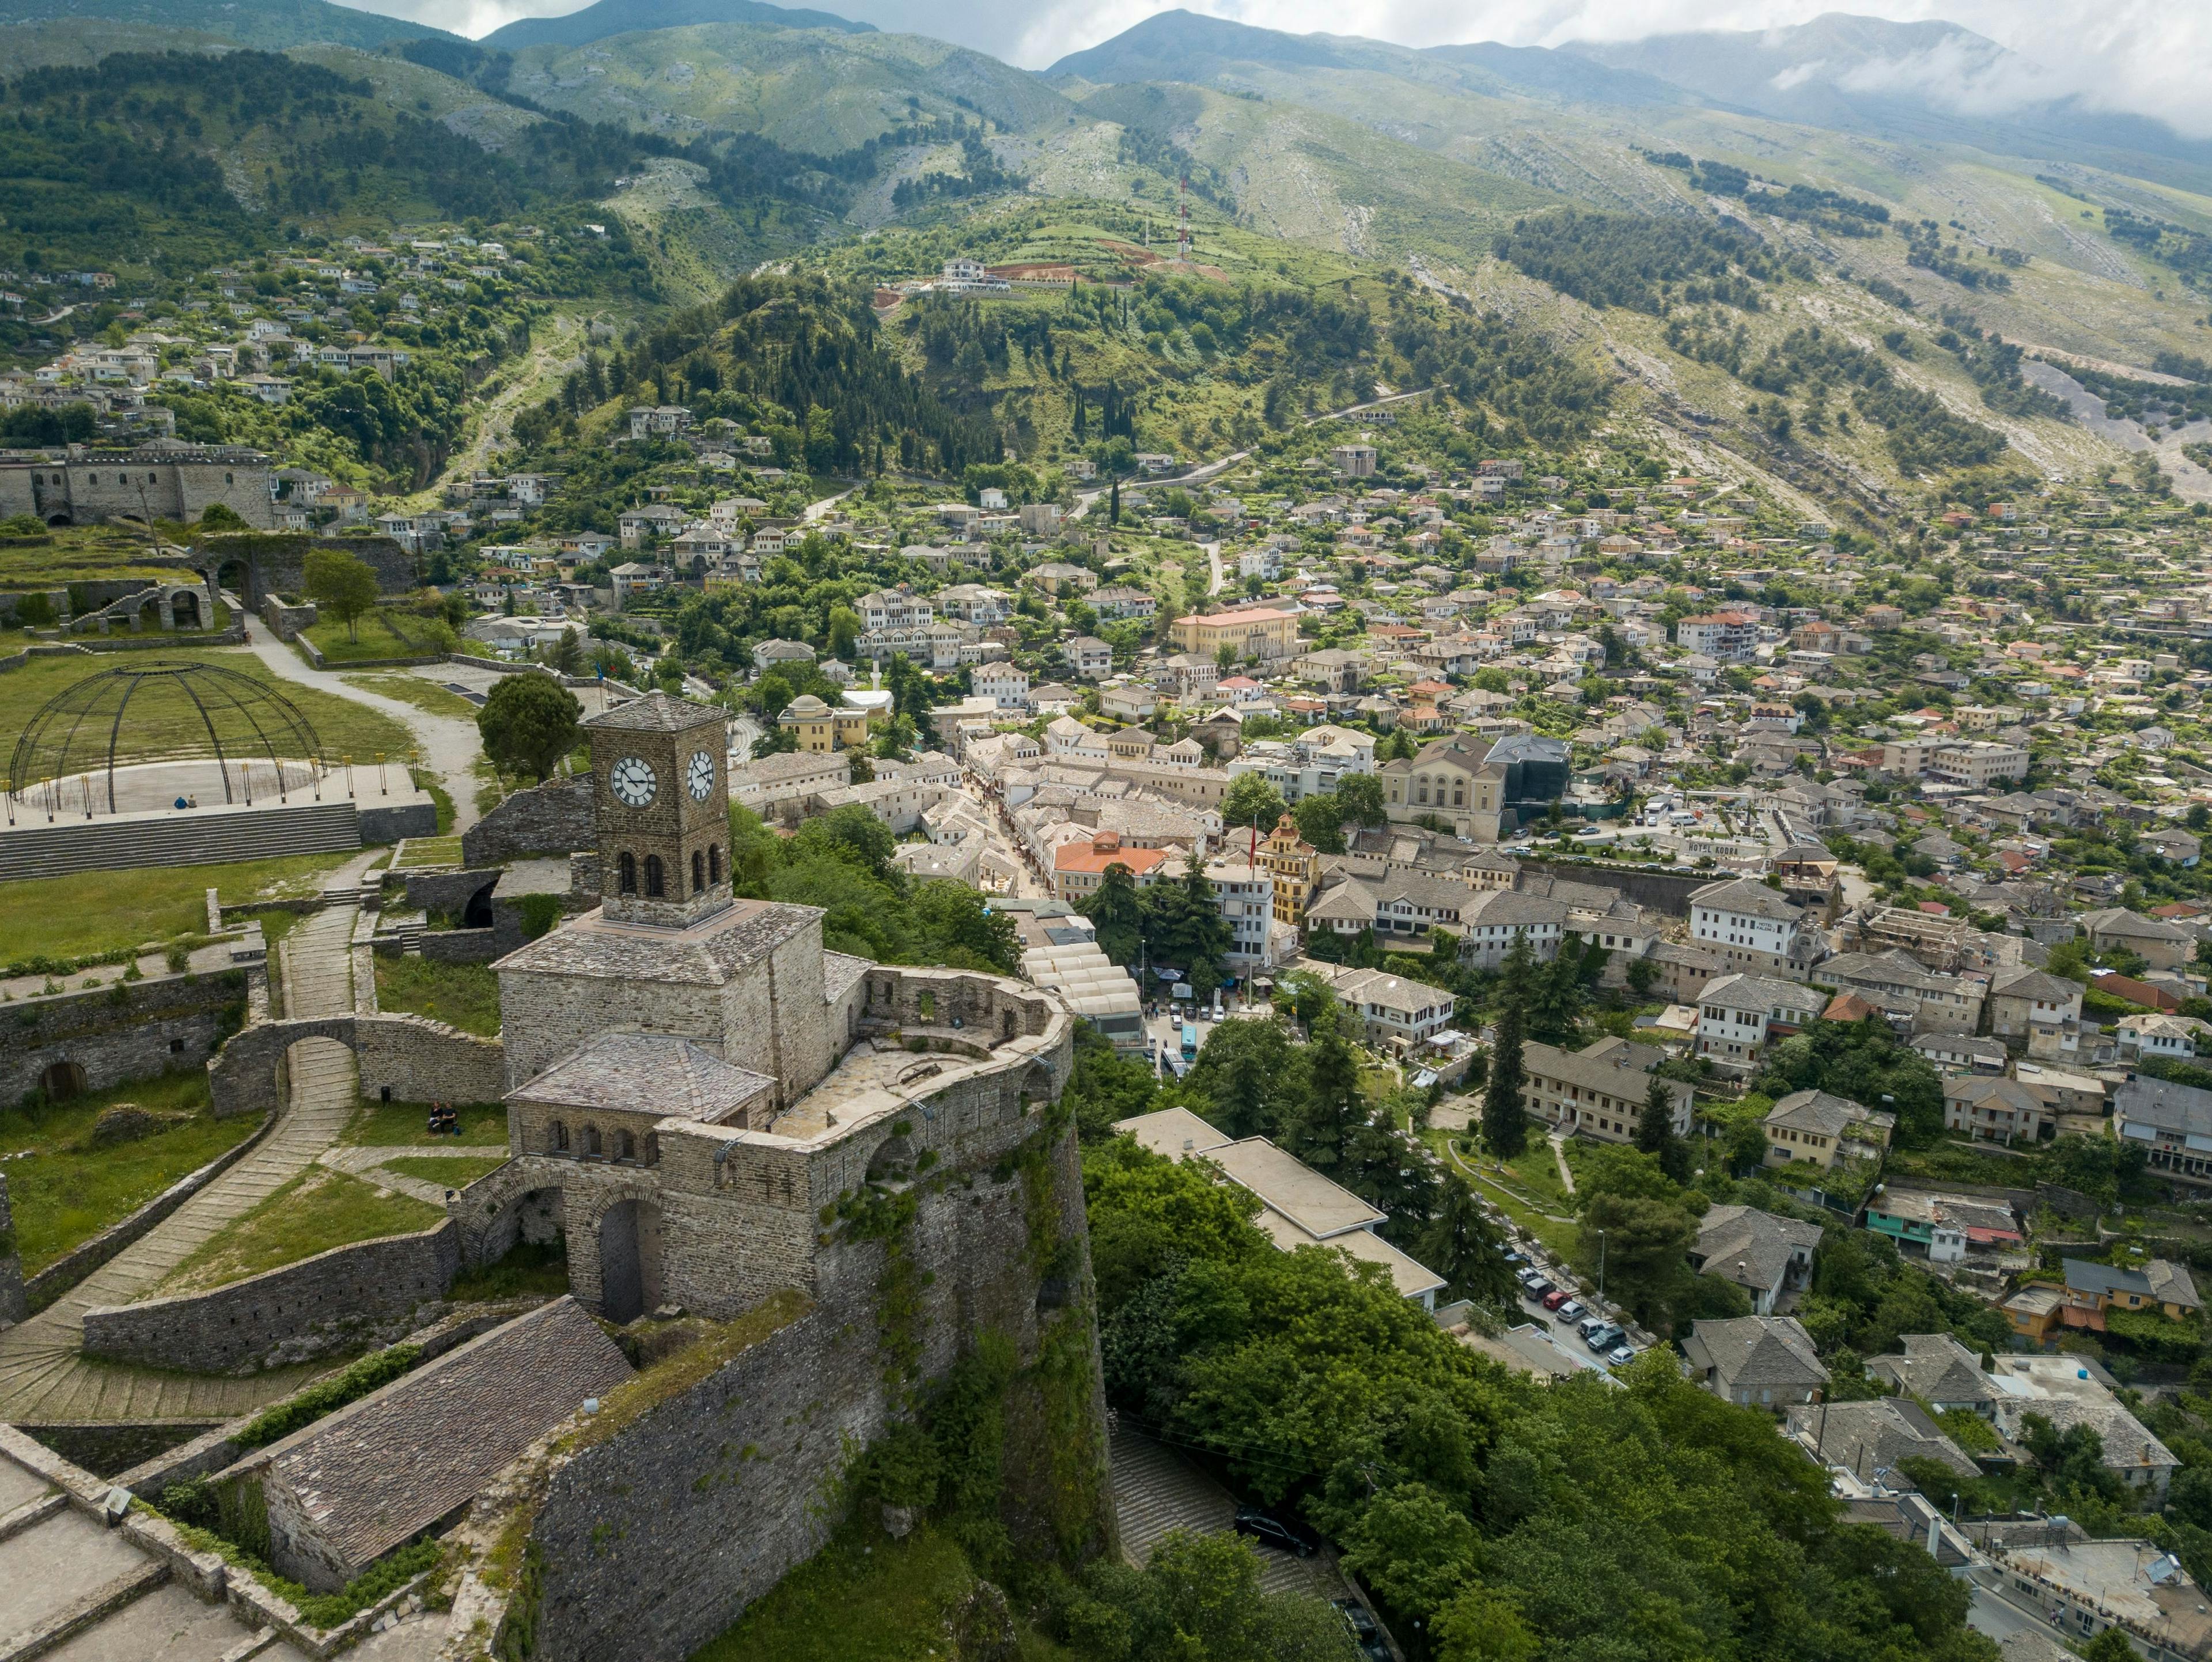 Trending Destination: What to See in Albania - Gjirokaster - RatePunk